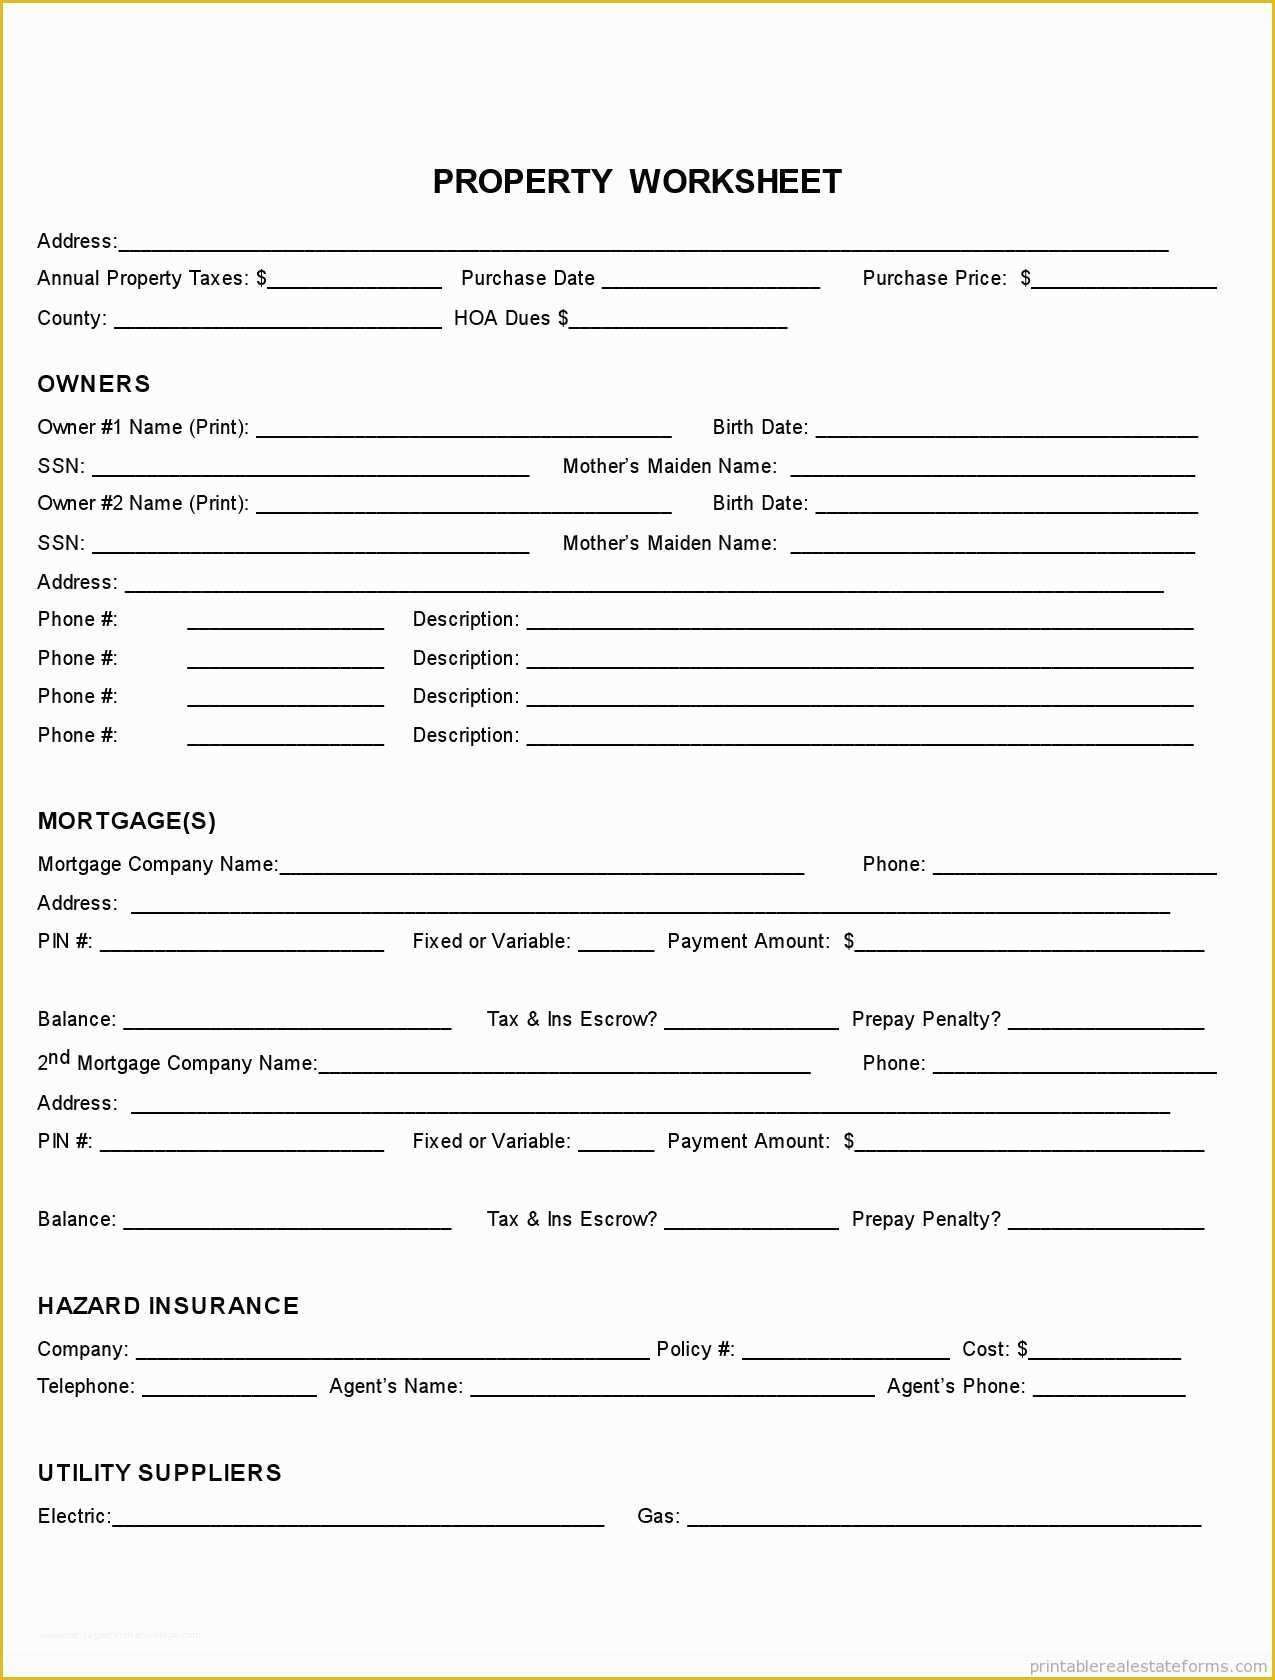 Free Fact Sheet Template Of Sample Printable Property Fact Sheet form